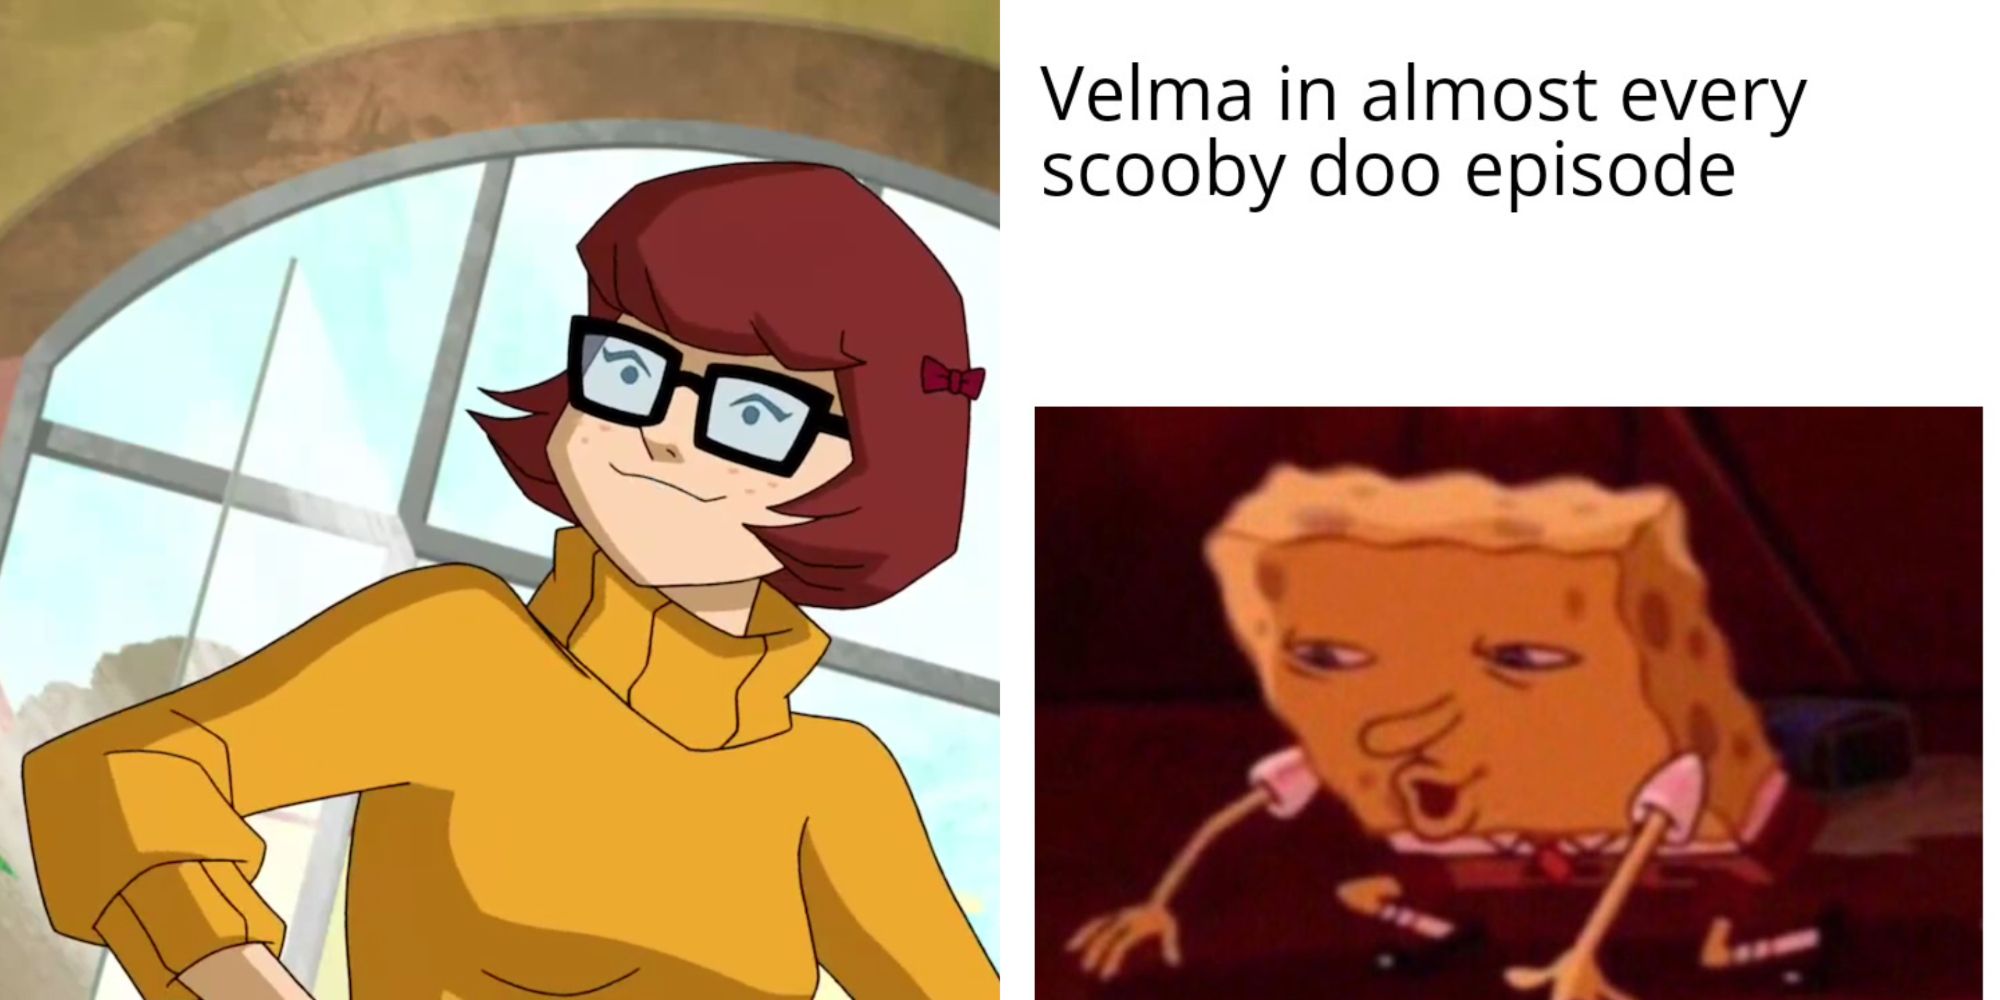 Velma smirks as Spongebob looks for his glasses